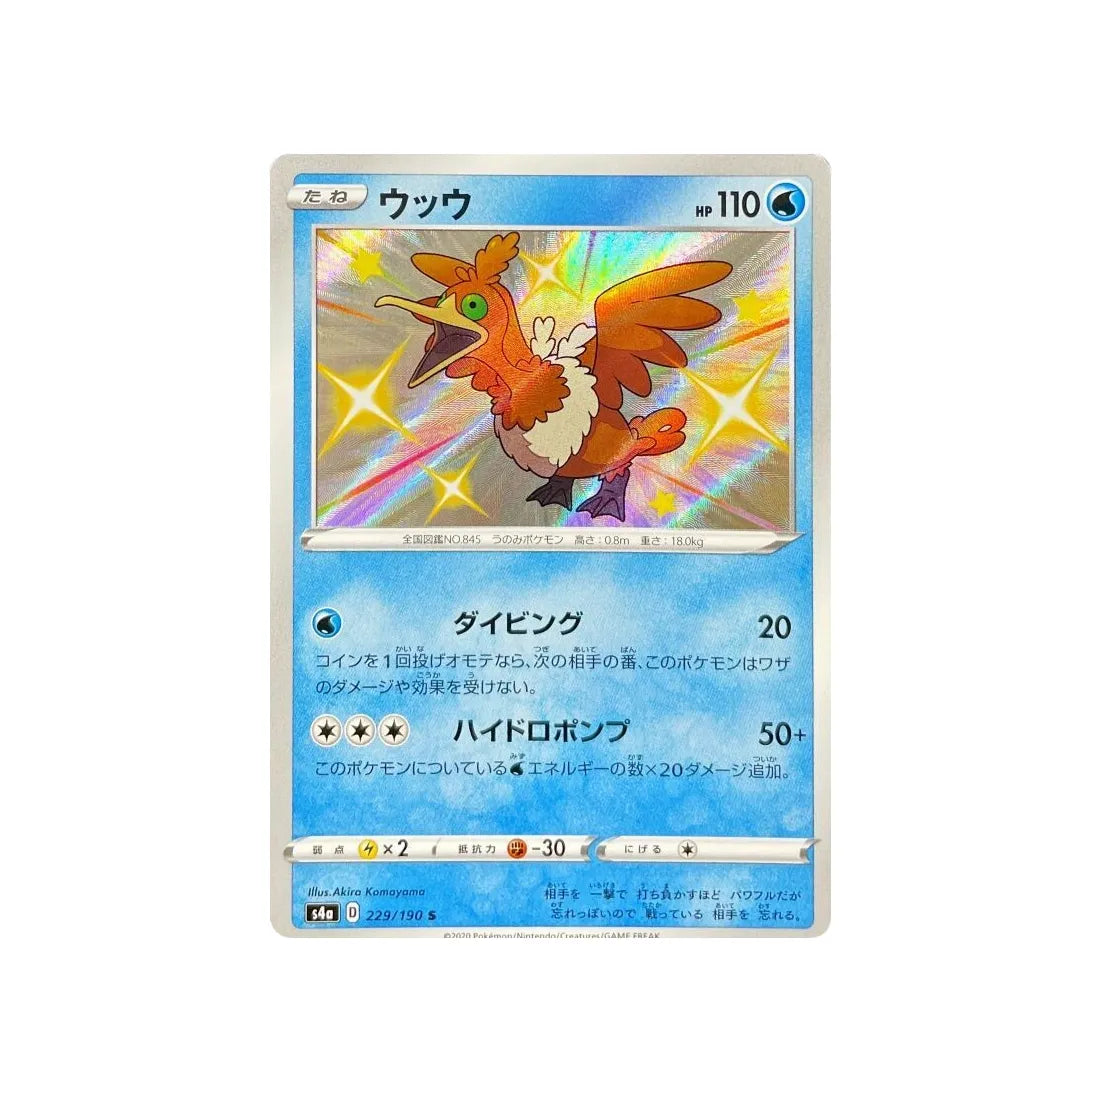 nigosier-carte-pokemon-shiny-star-s4a-229